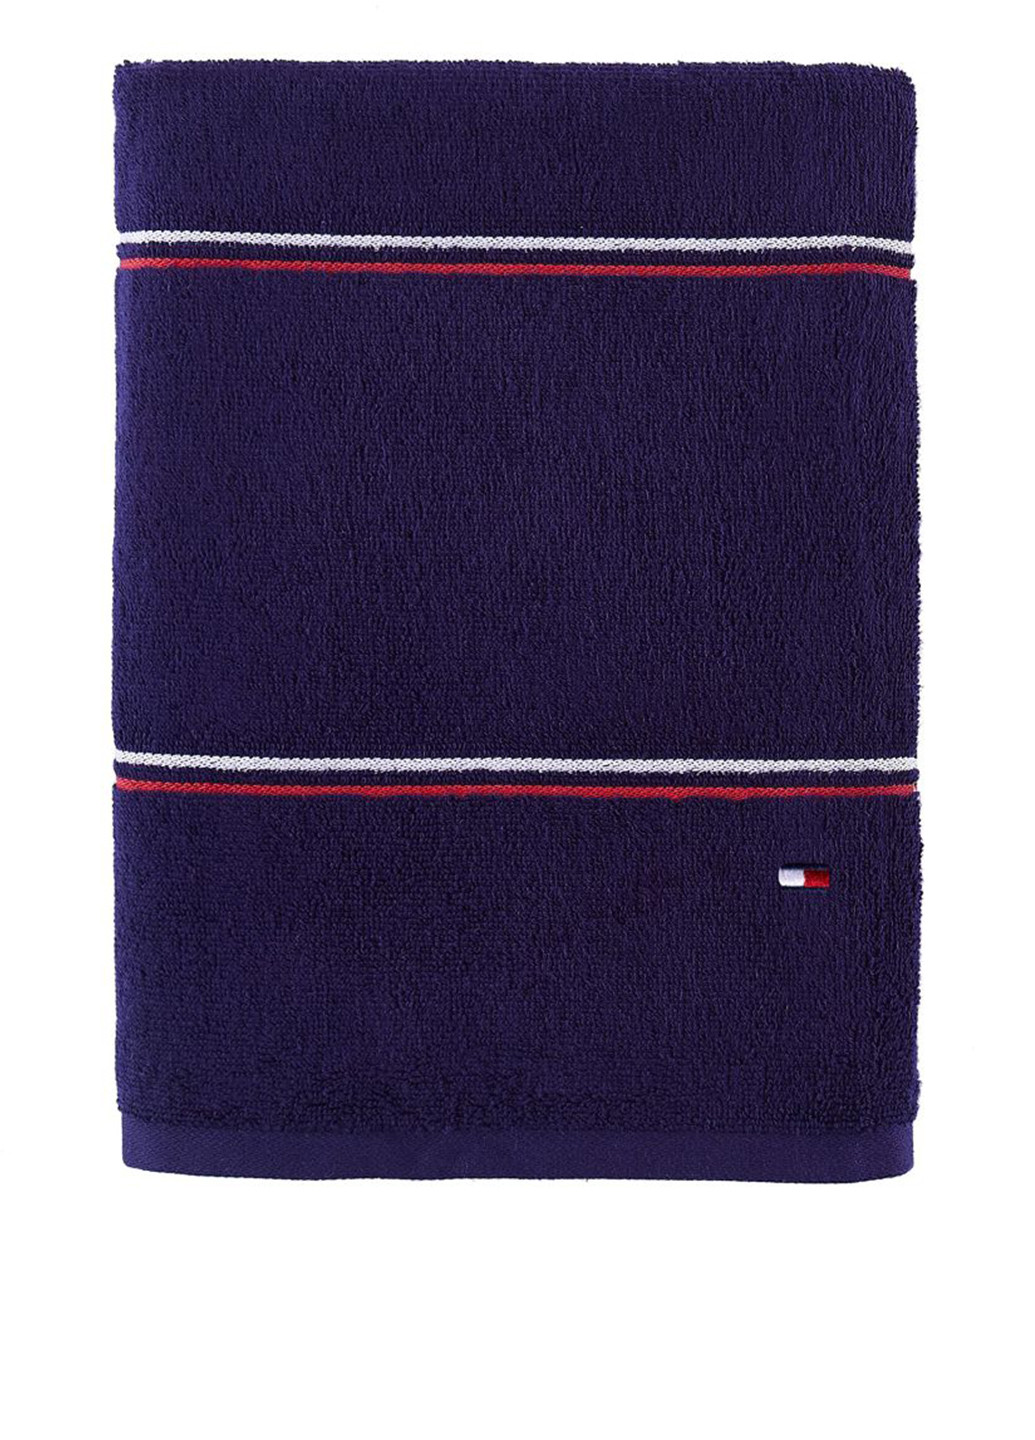 Tommy Hilfiger полотенце, 76х138 см полоска синий производство - Индия